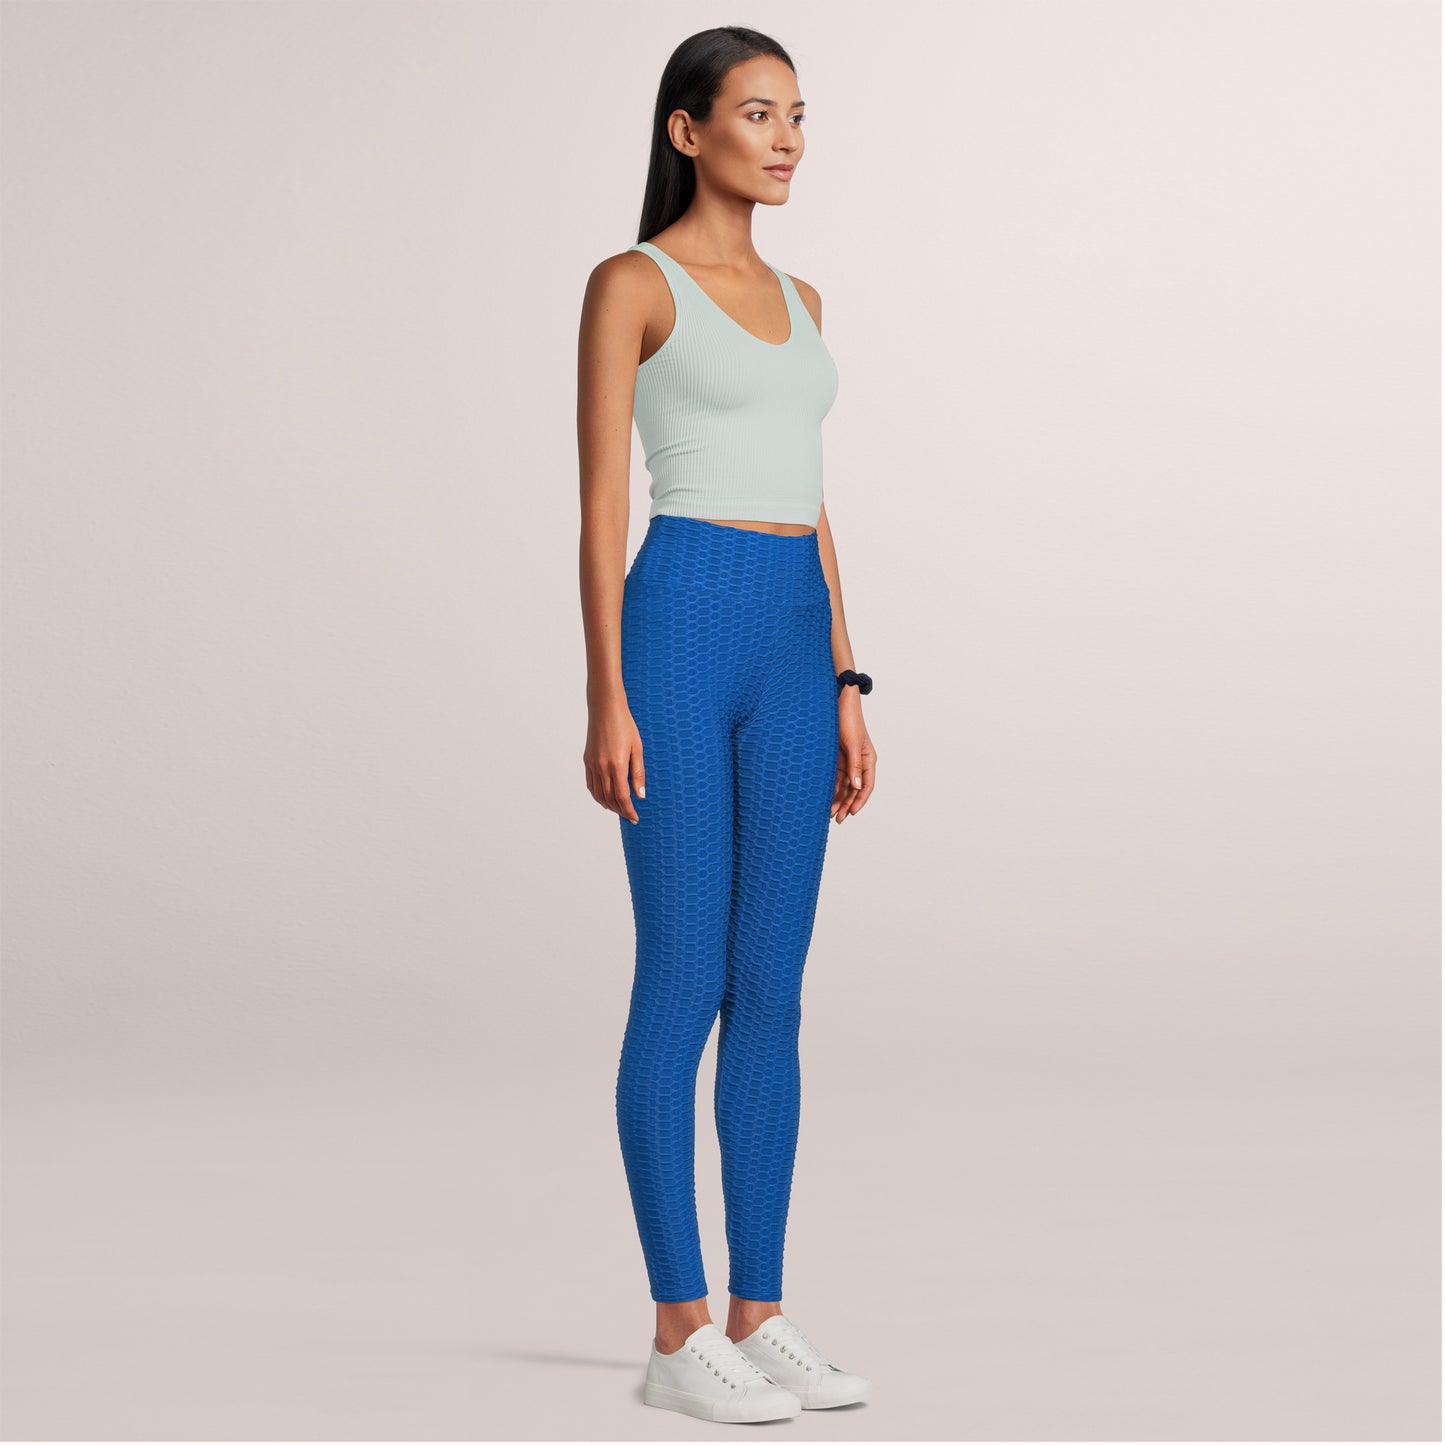 SOBEYO Womens'  Legging Bubble Stretchable Blue